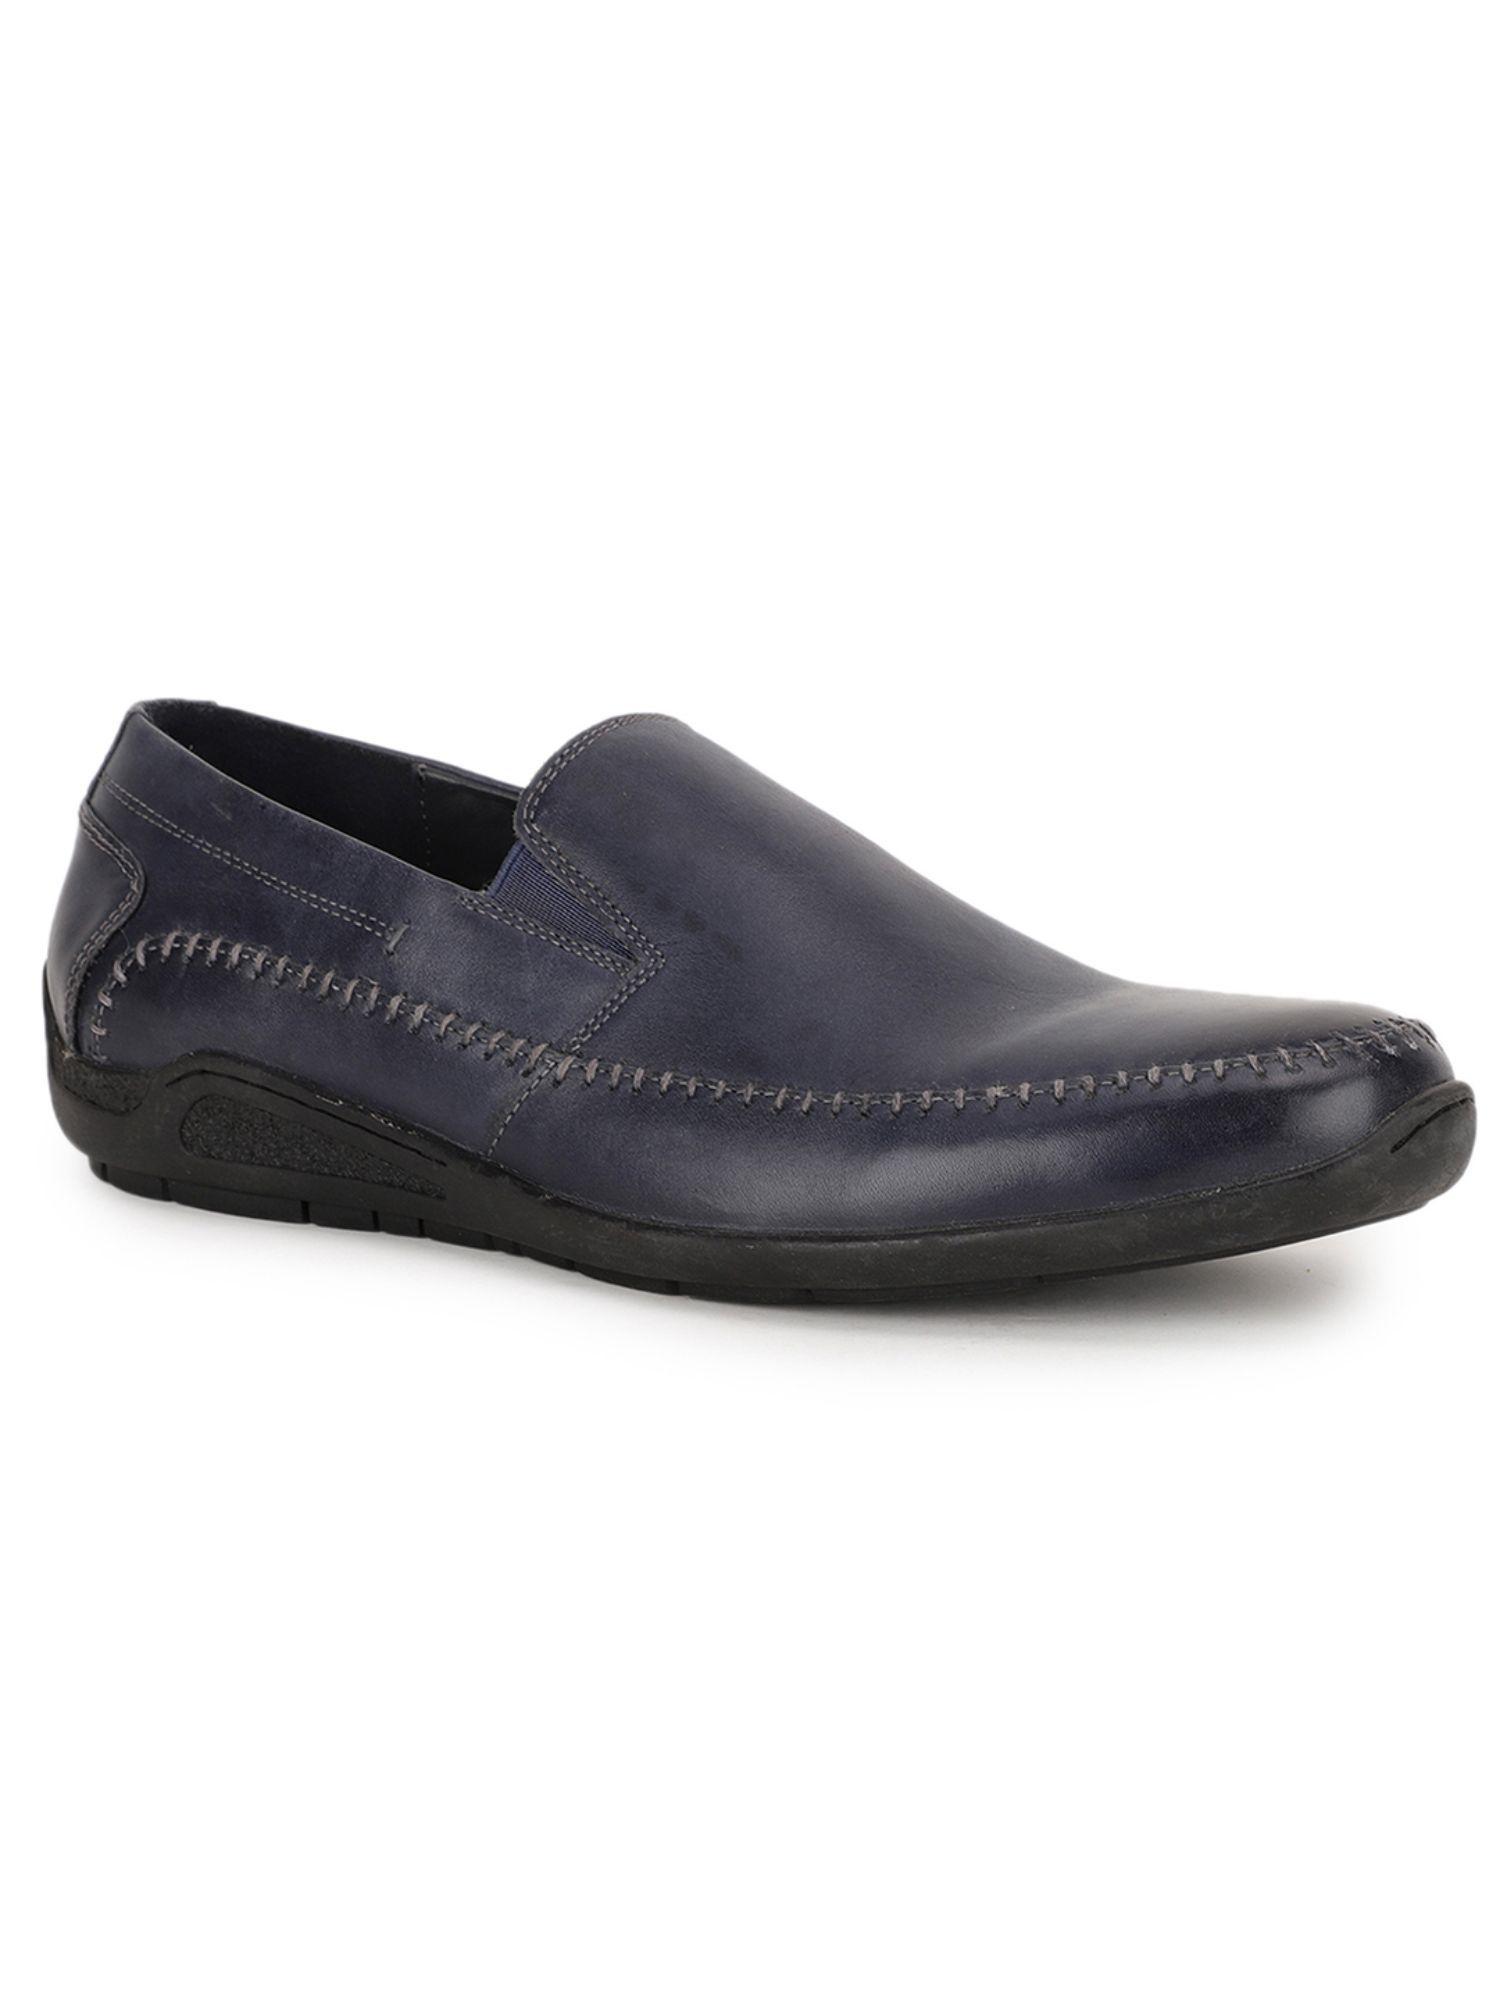 mens-navy-blue-slip-on-formal-loafers